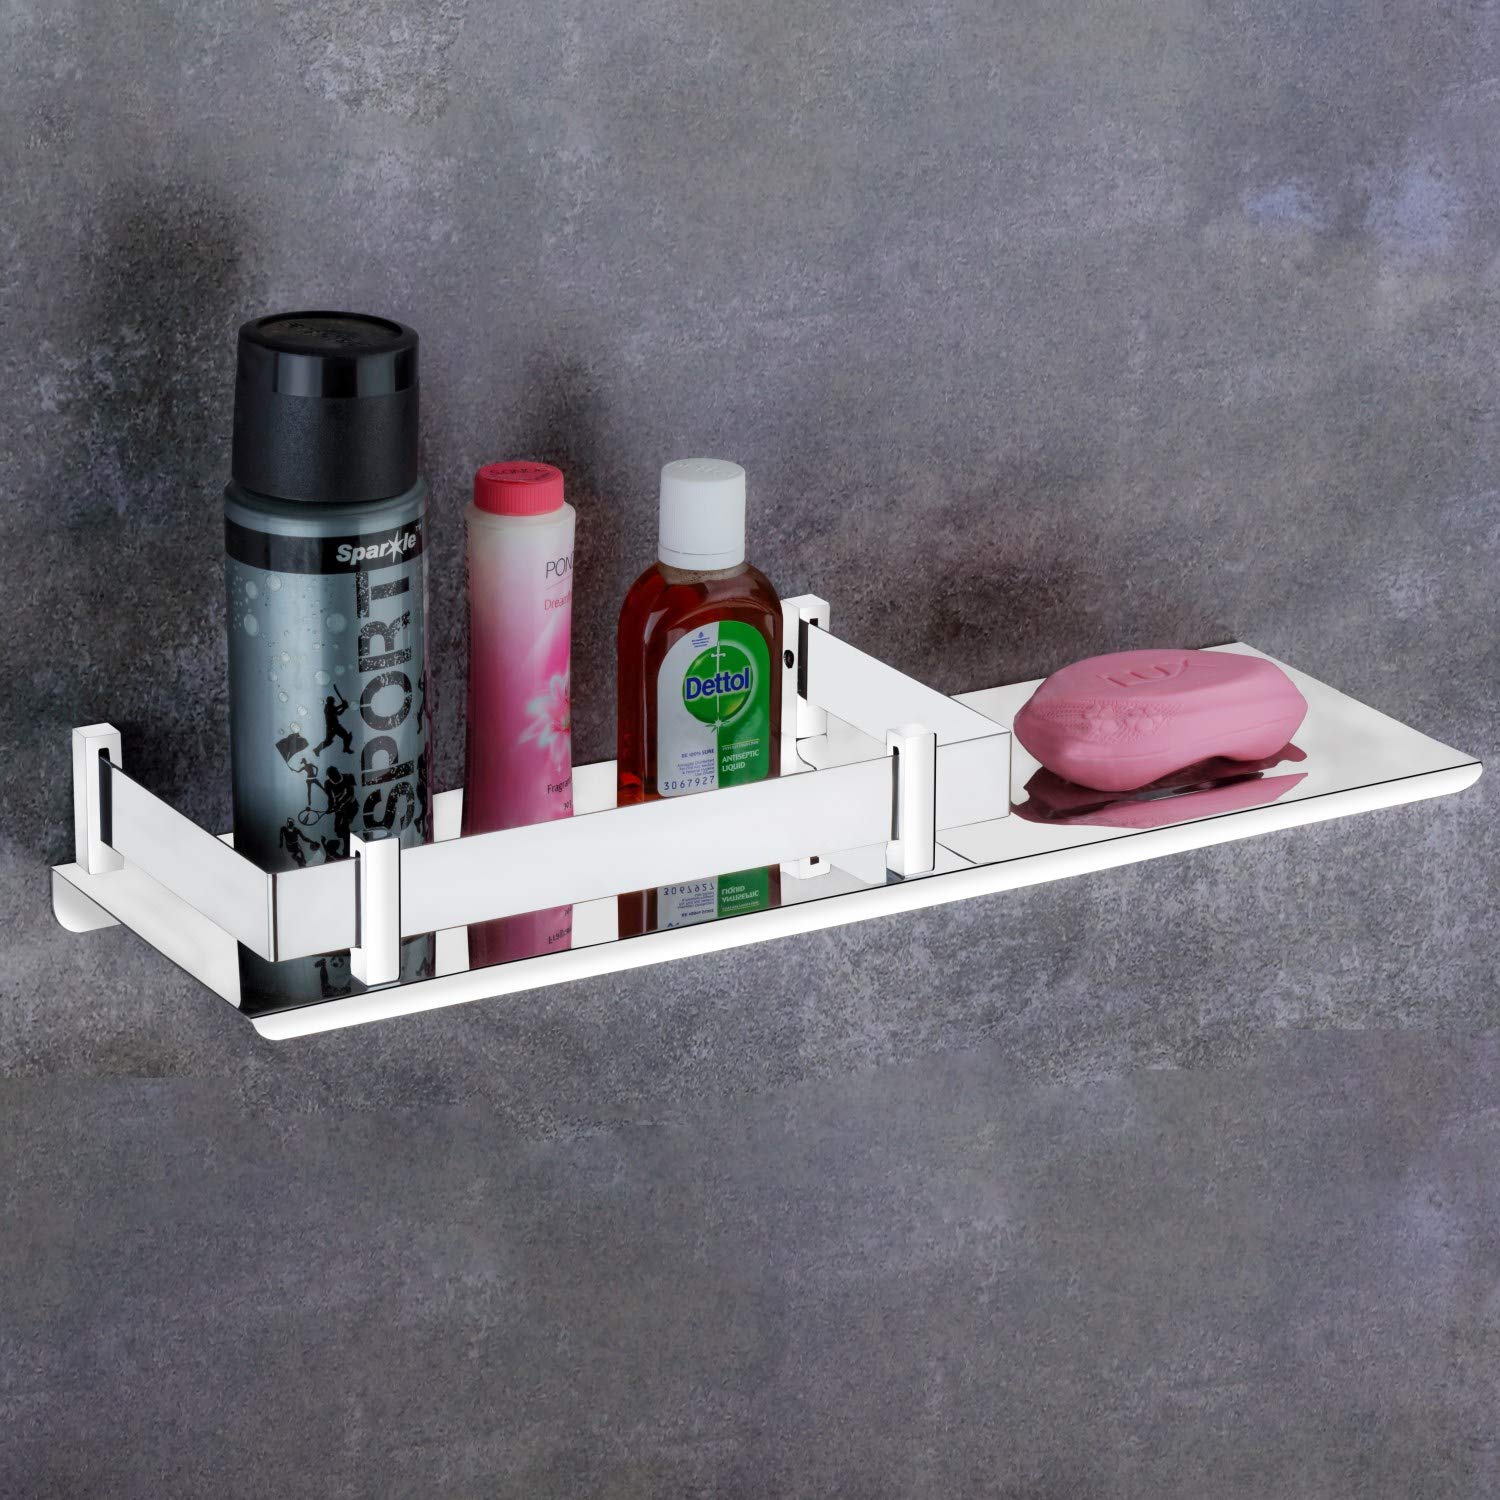 Plantex GI Steel Self-Adhesive Multipurpose Bathroom Shelf with Hooks/Towel  Holder/Rack/Bathroom Accessories - Wall Mount (Black,Powder Coated)